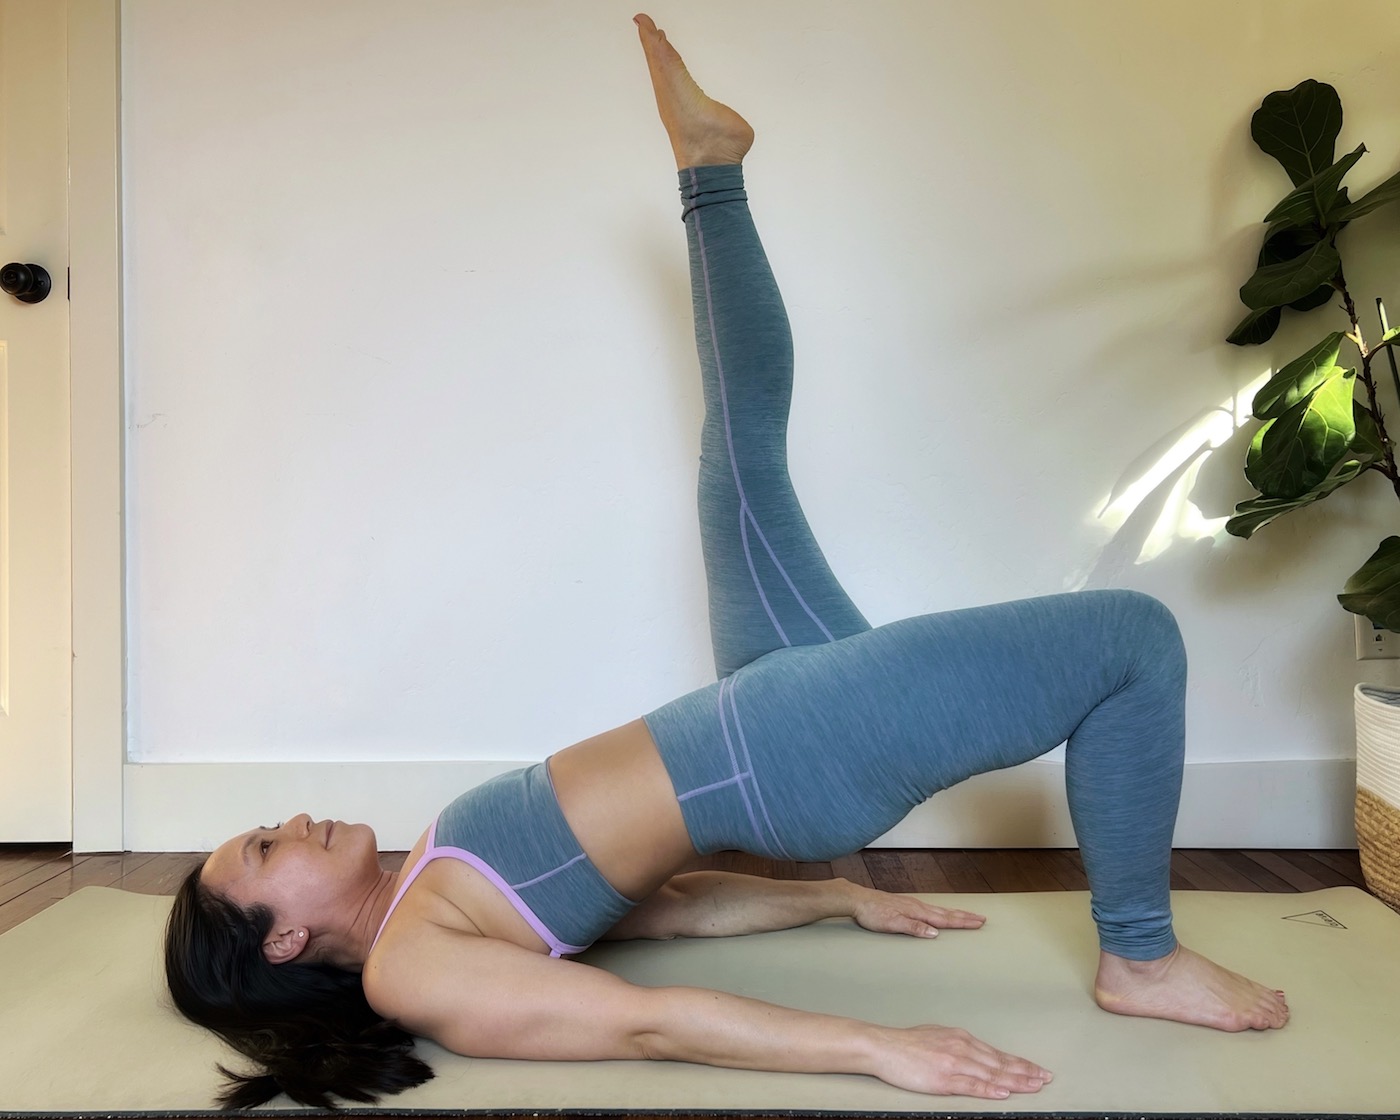 Improve your bridge pose | wheel pose for beginners - YouTube